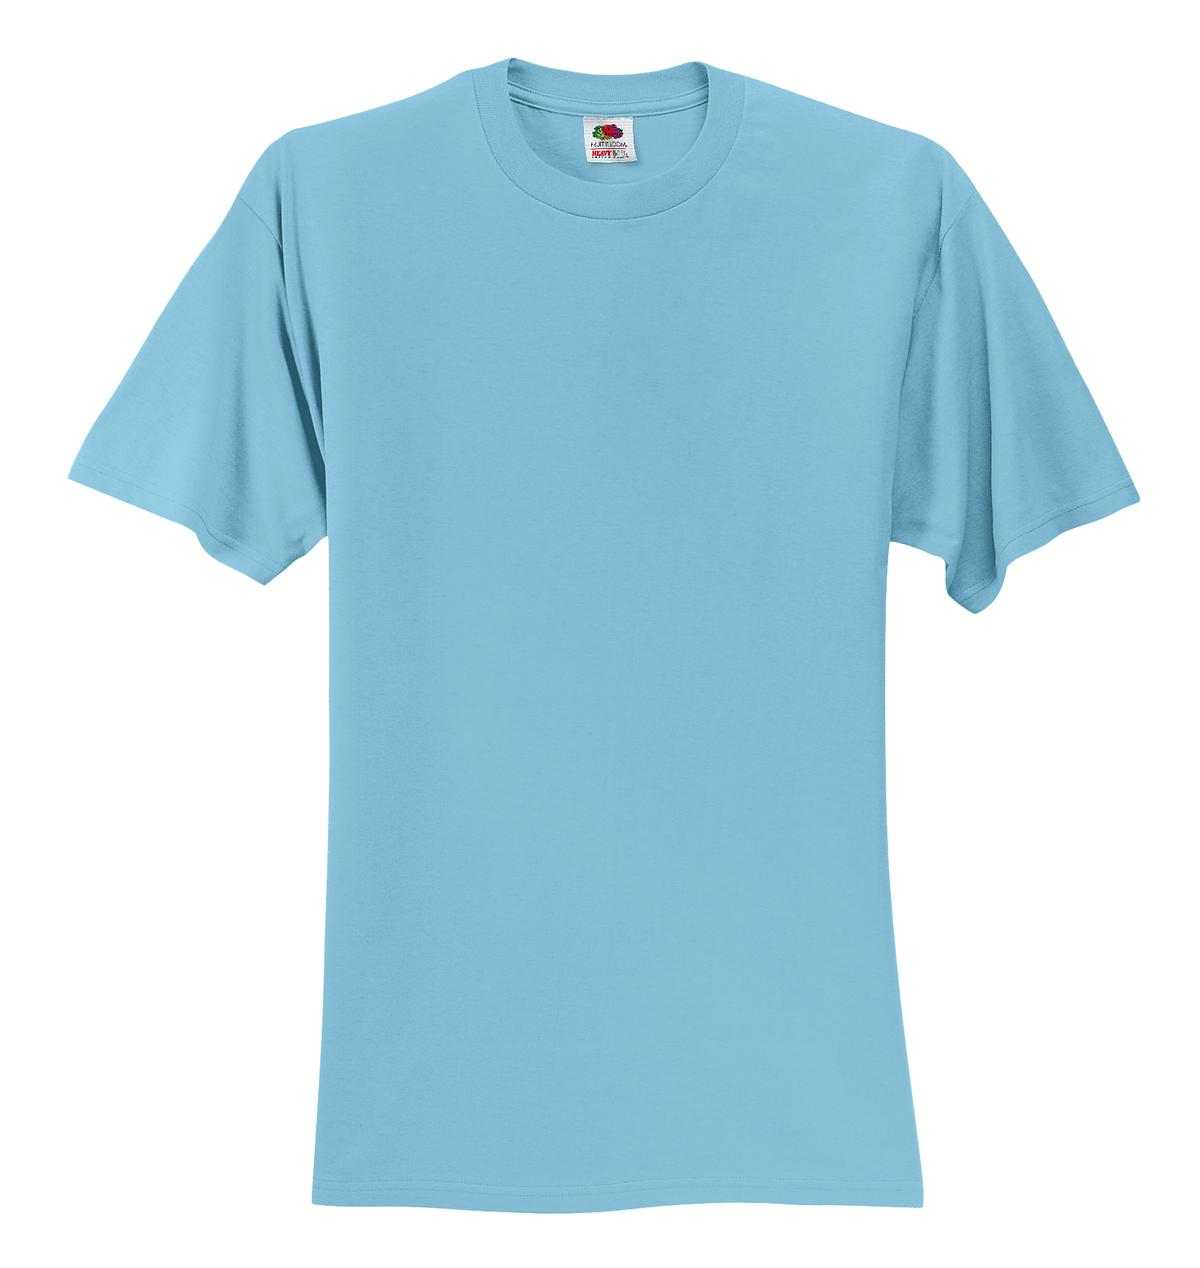 Fruit of the Loom 3930 HD Cotton 100% Cotton T-Shirt - Aquatic Blue - HIT a Double